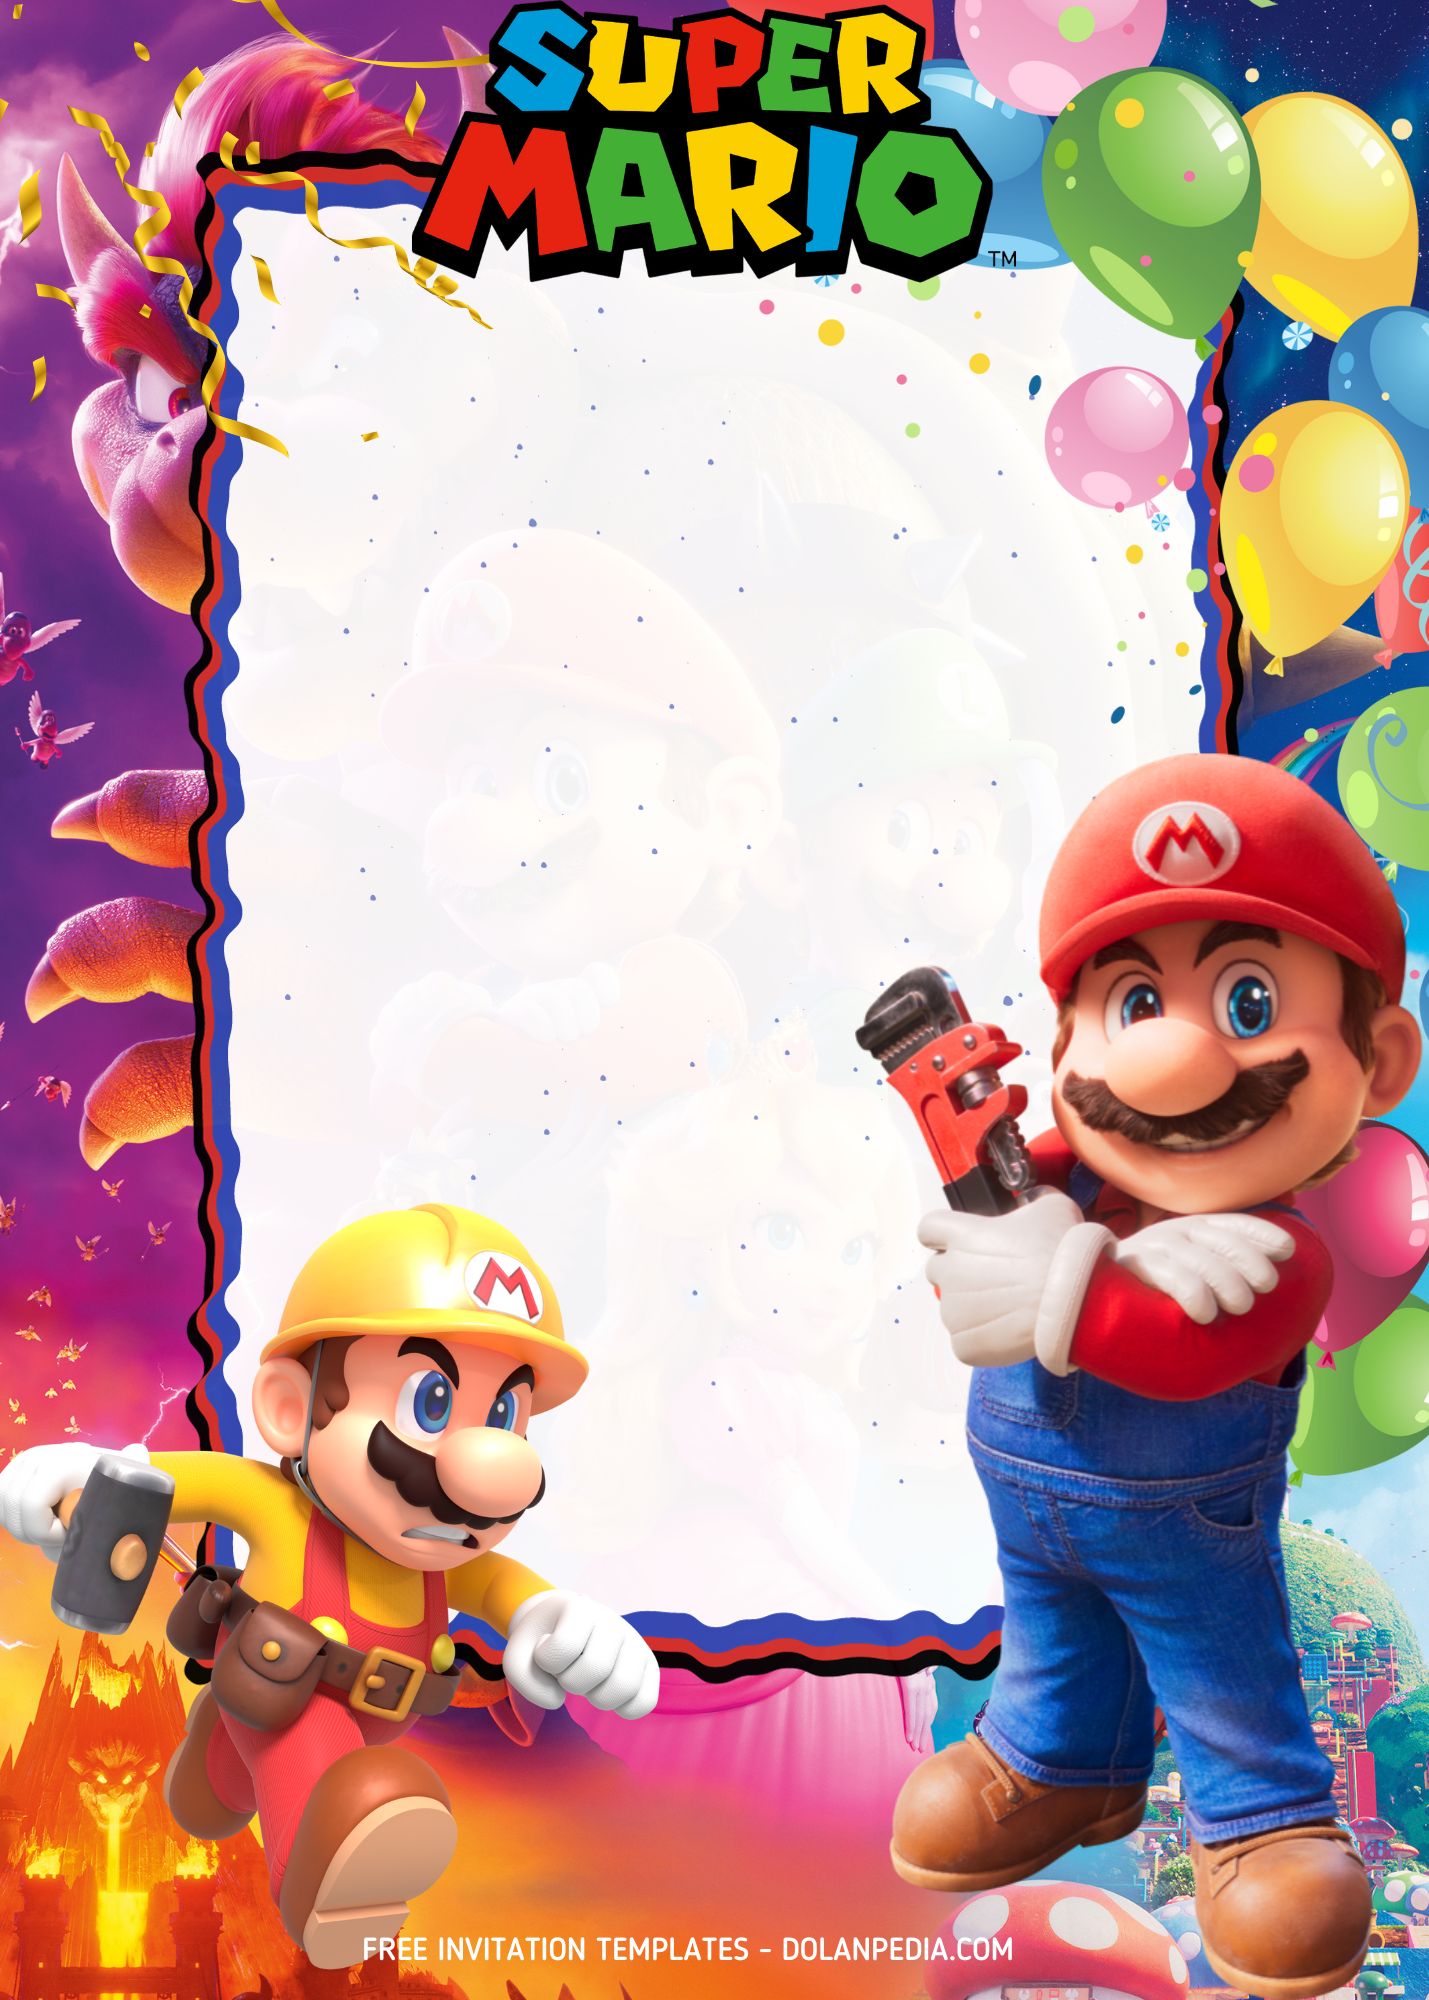 FREE Super Mario Adventure Party Invitation Templates